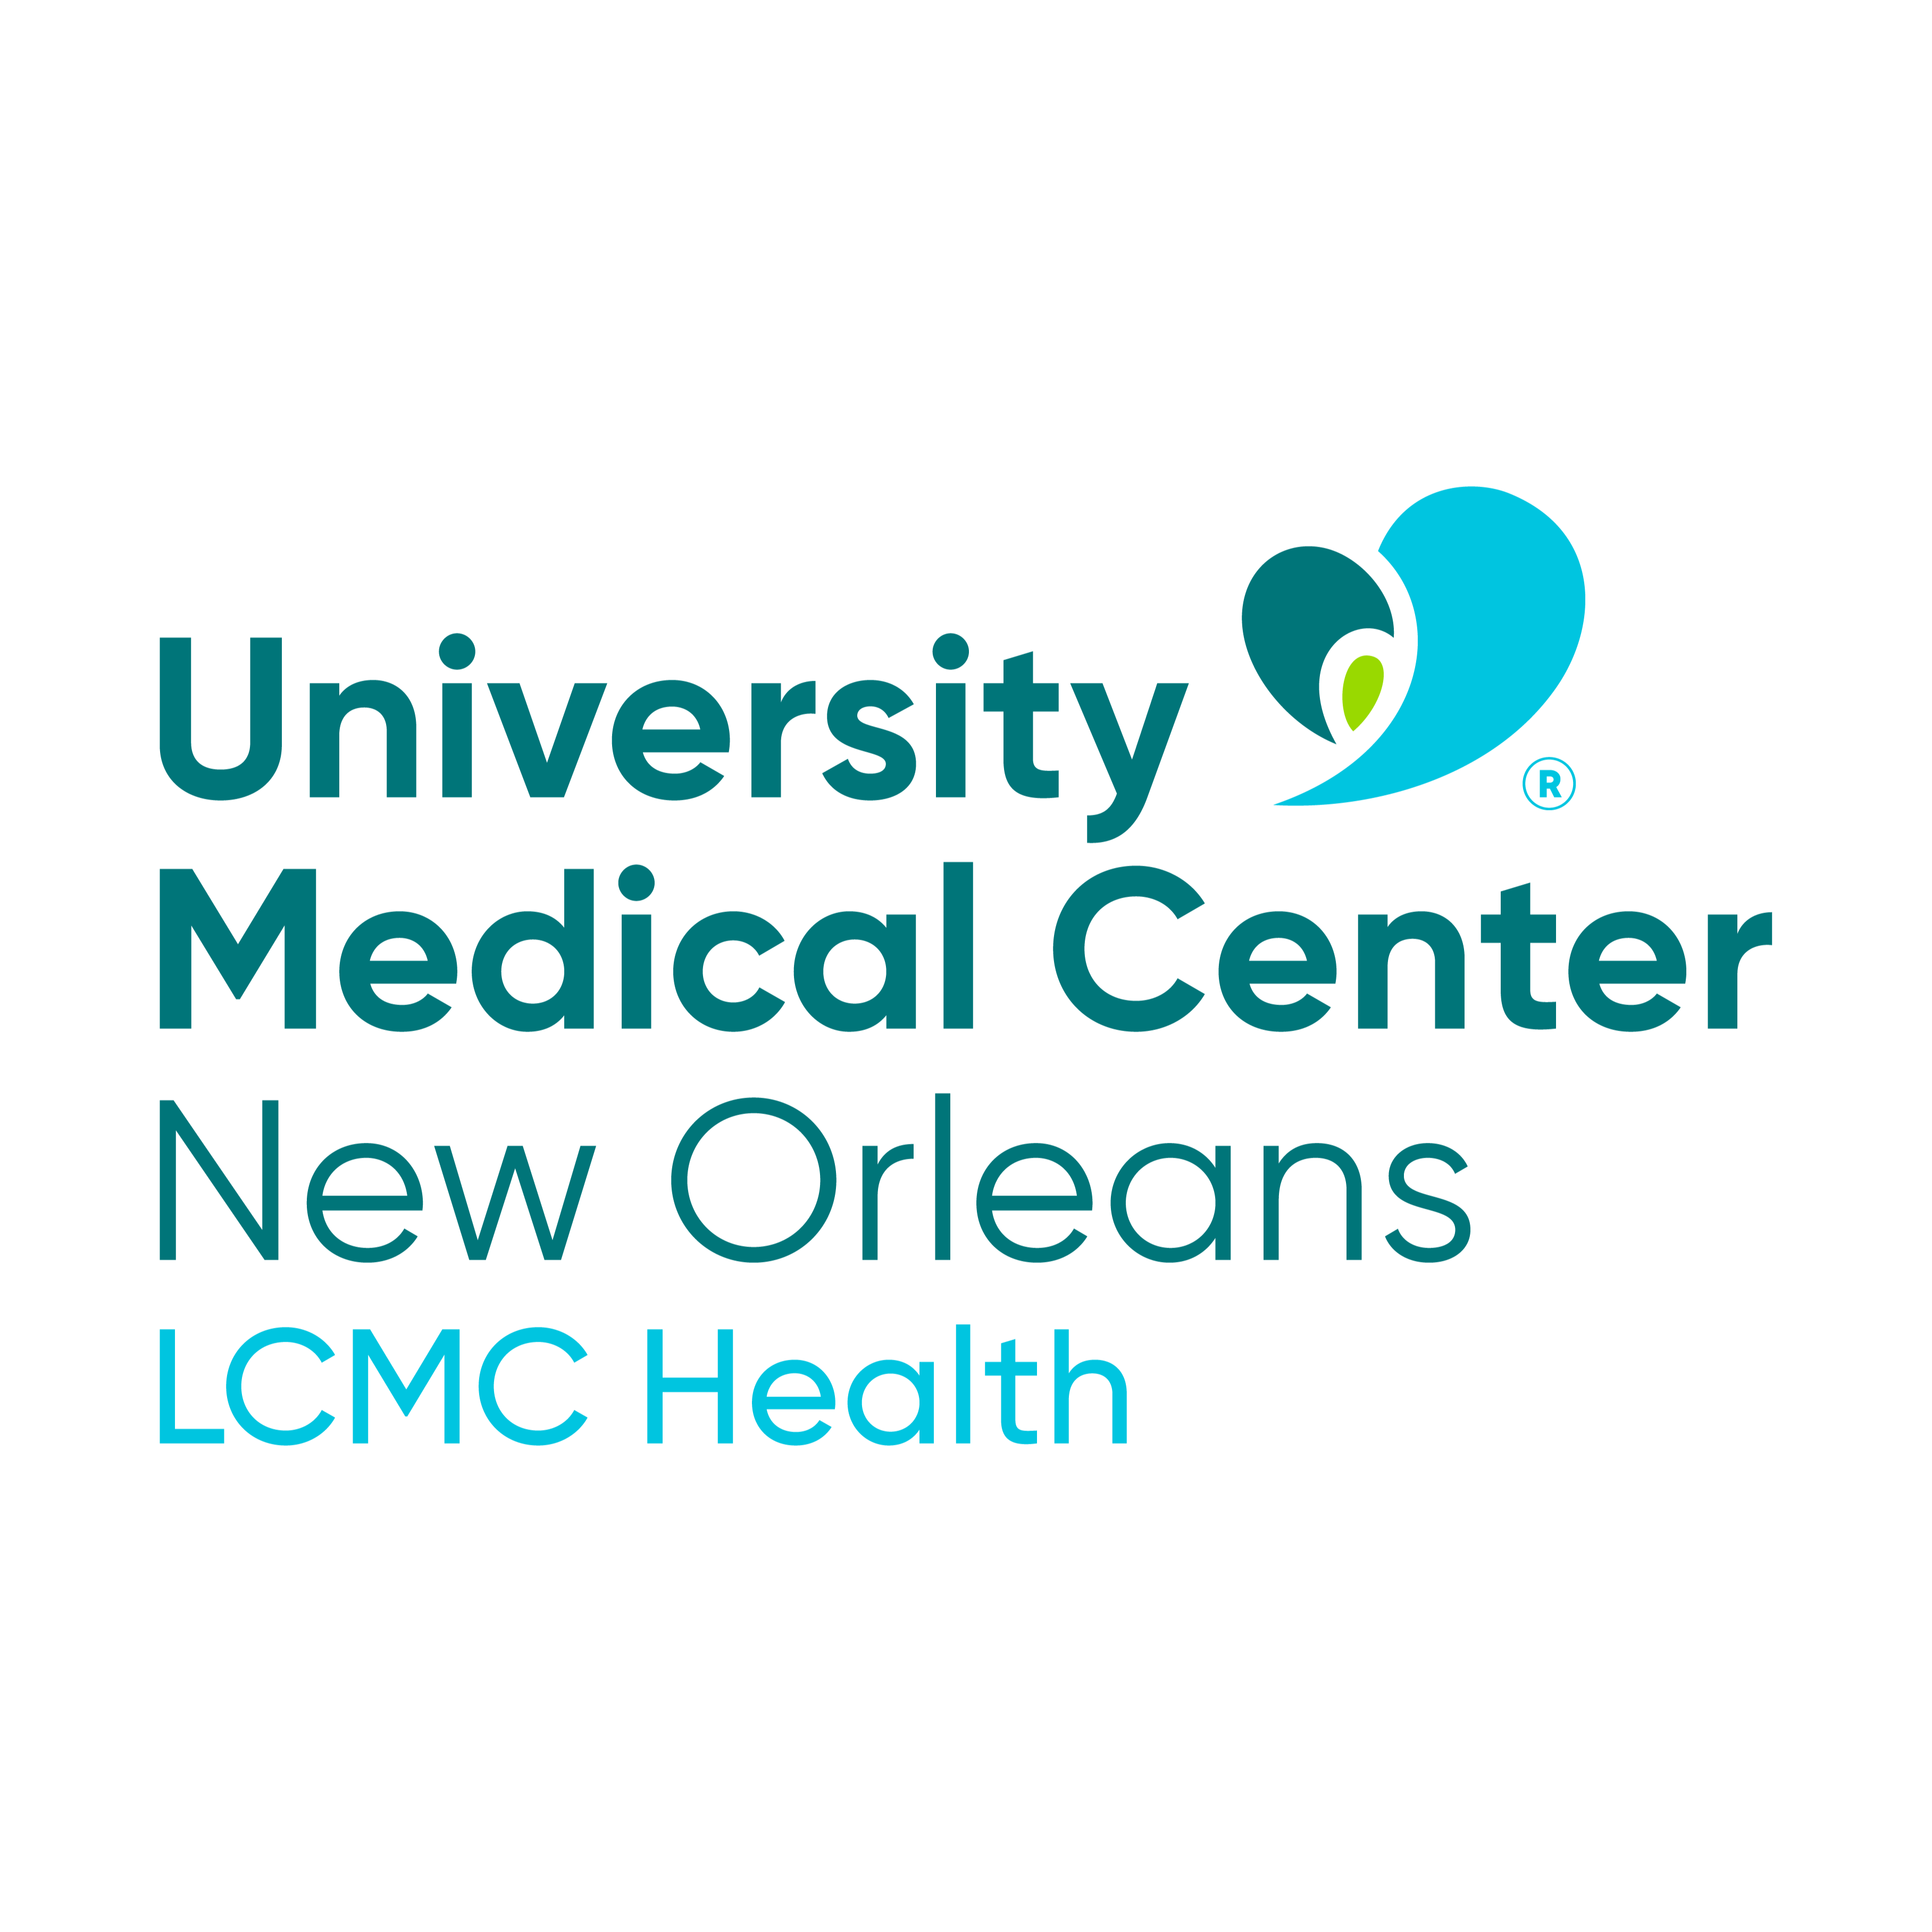 University Medical Center New Orleans LCMC Health